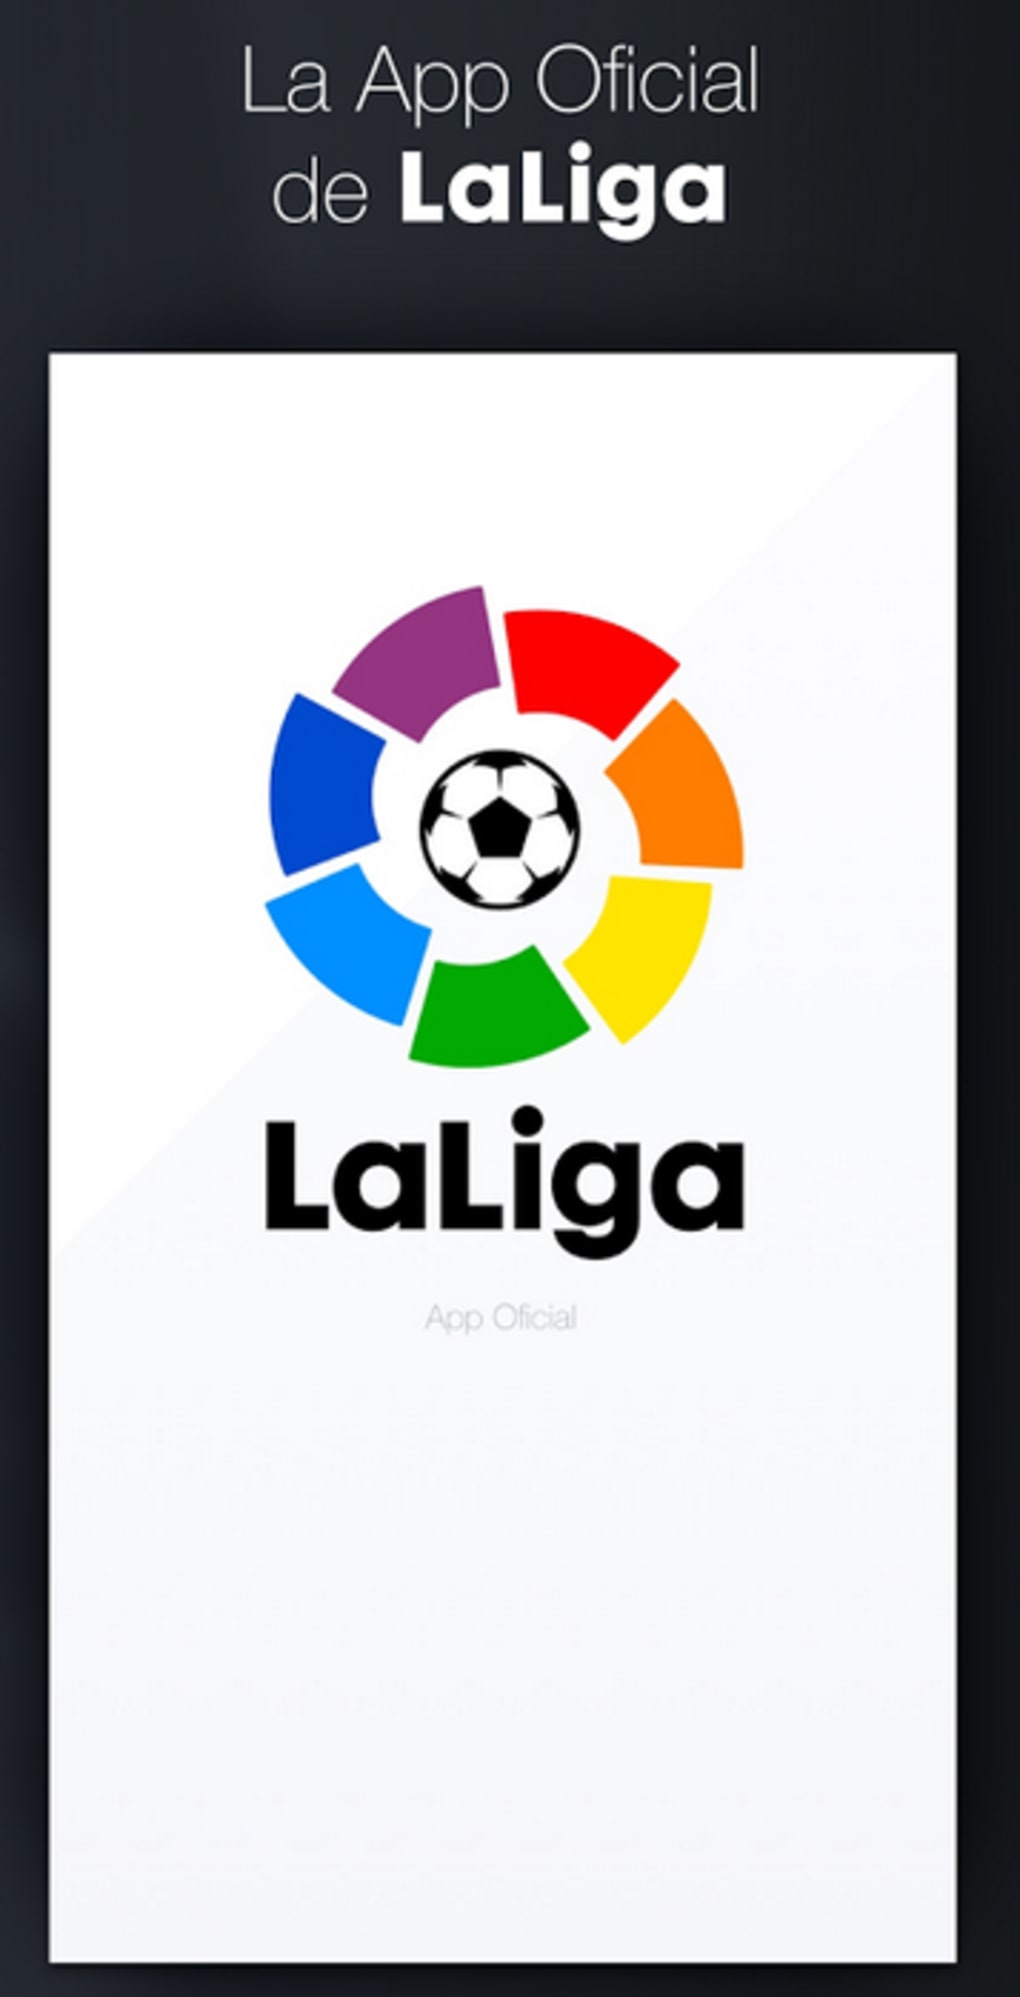 App futbol liga española